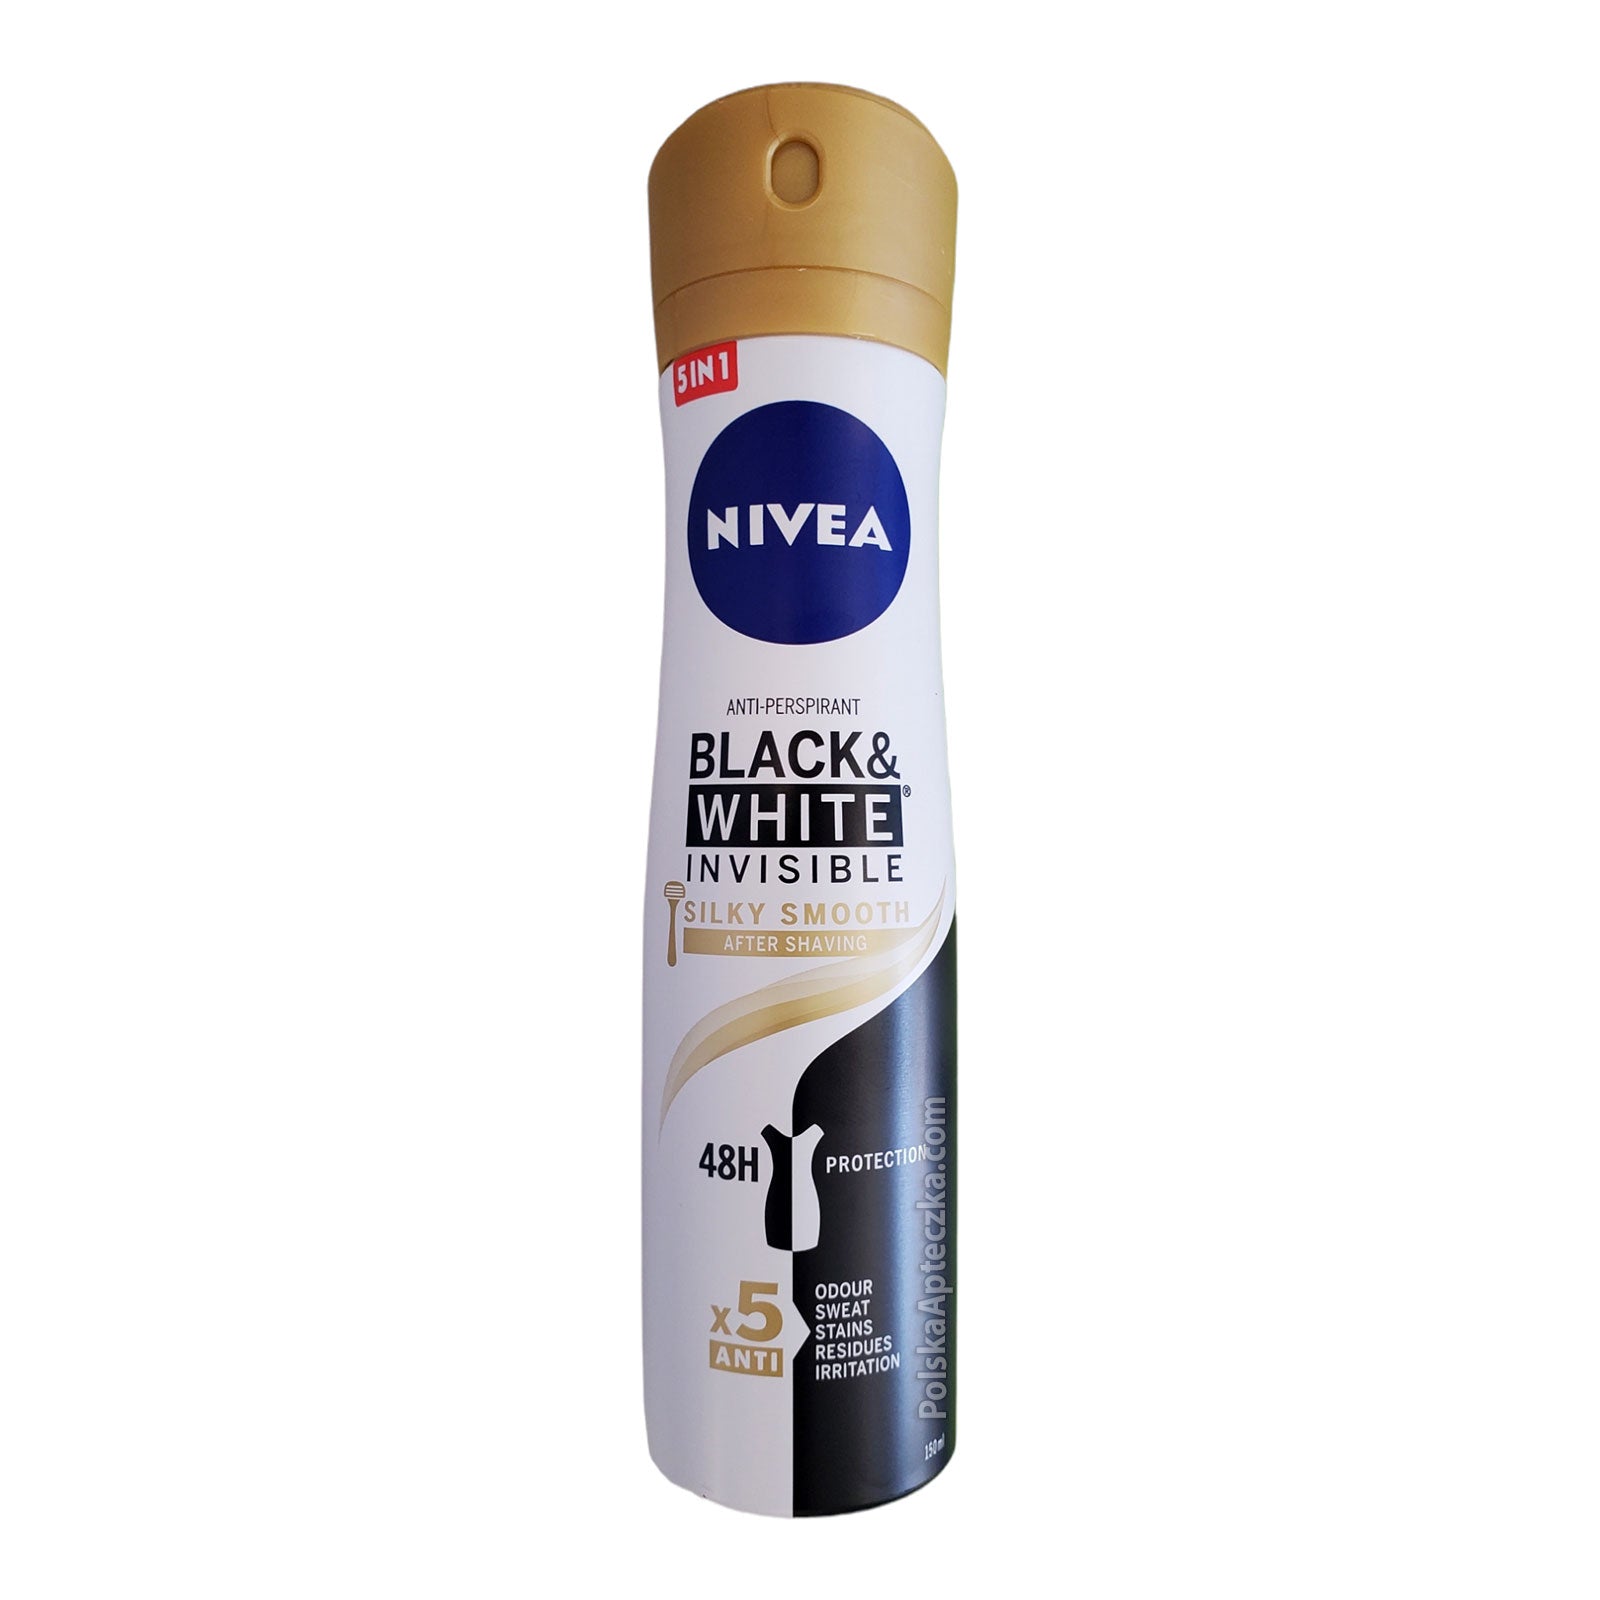 Nivea Black & White silky smooth anti-perspirant spray